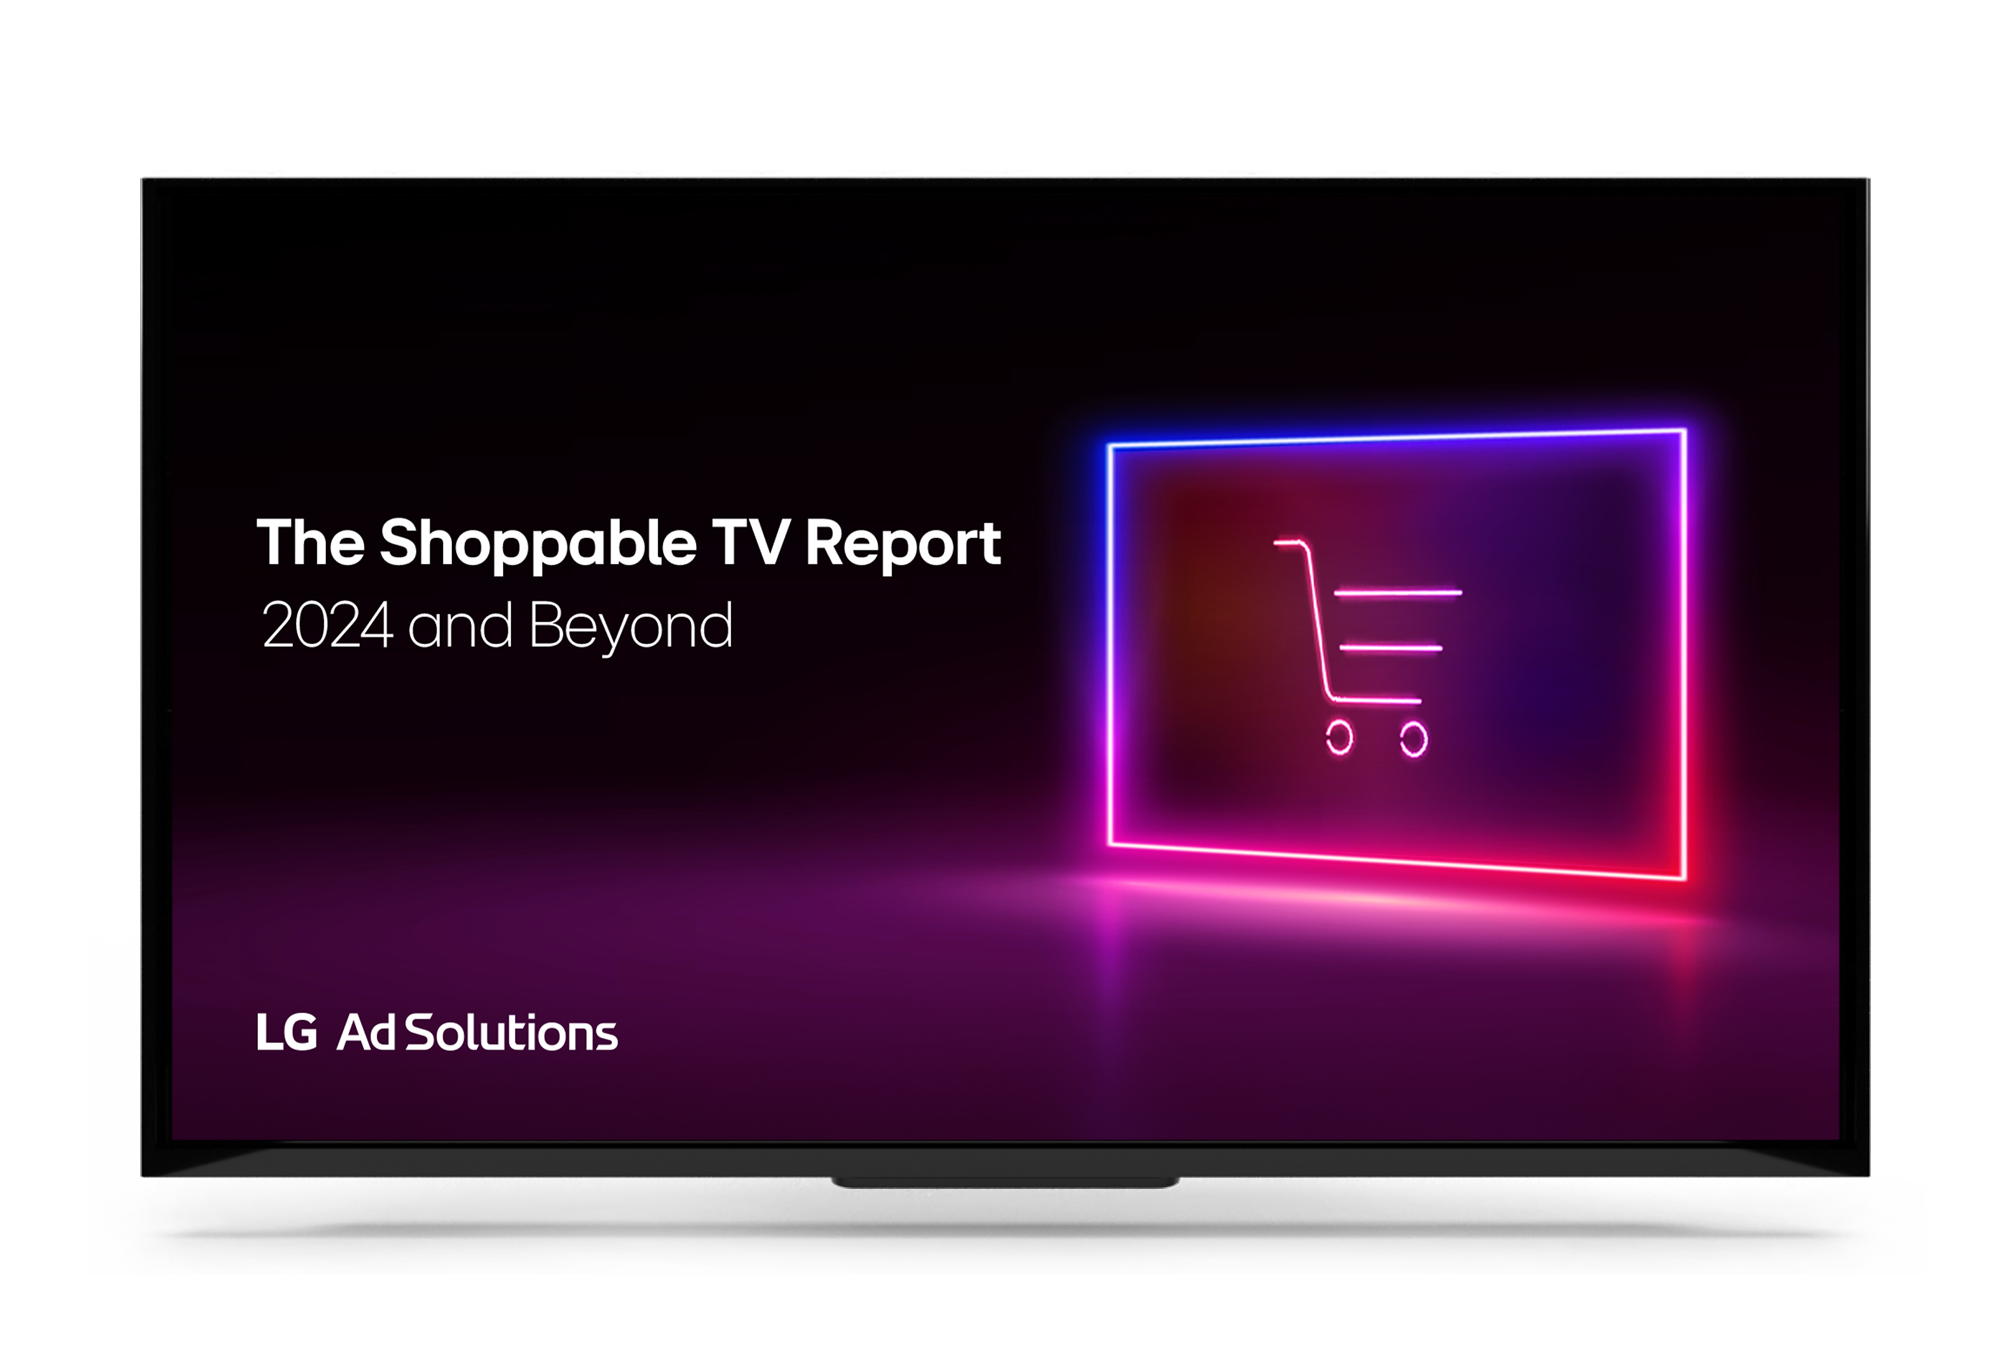 LG Ads TheShoppableTV Report TV mock